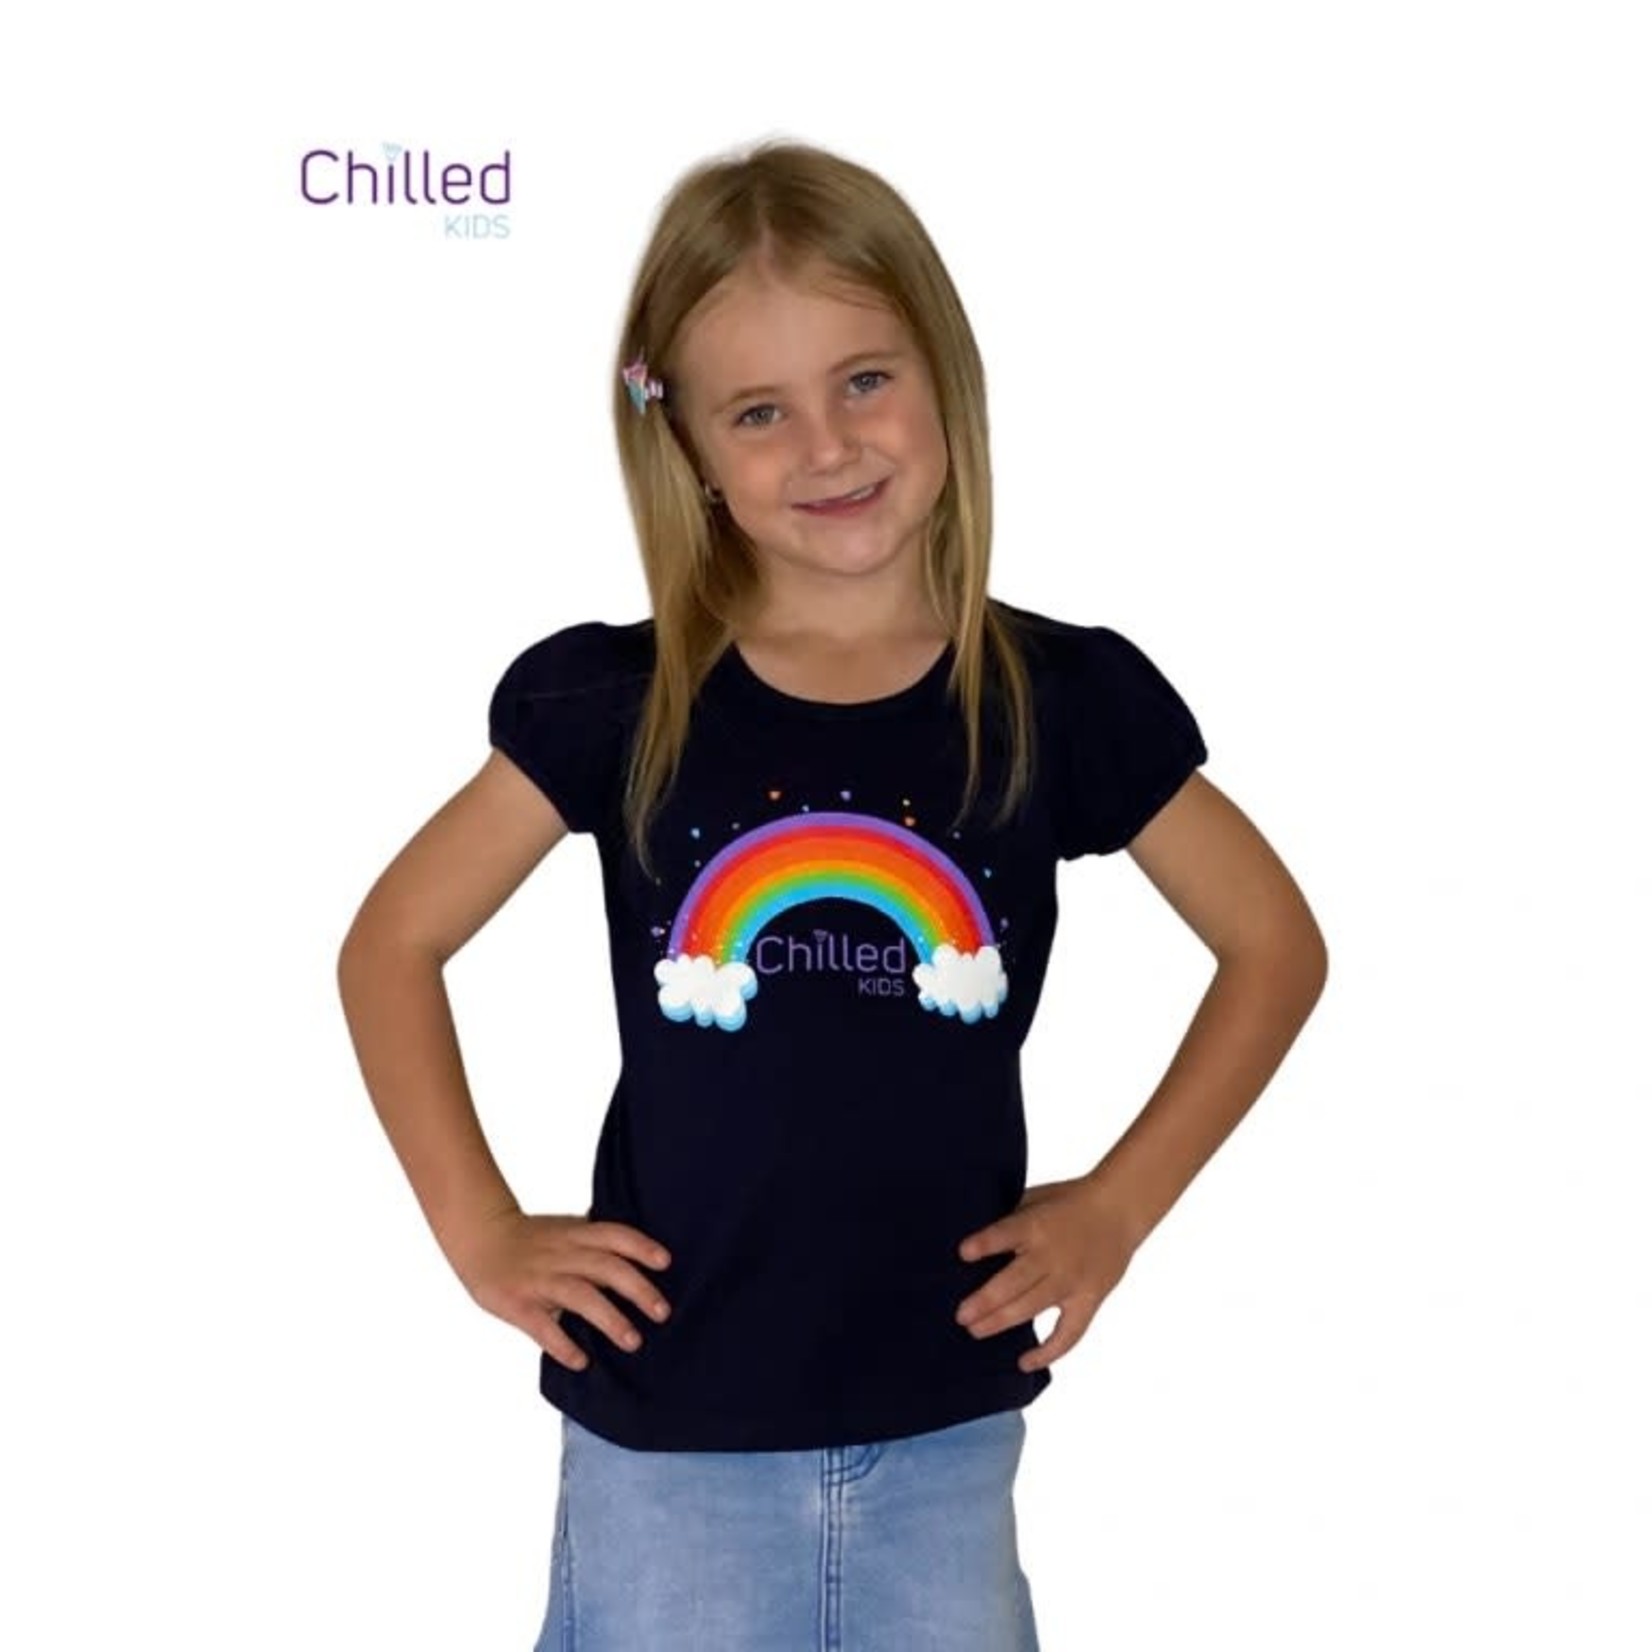 Chilled Kids Rainbow Magic Tee